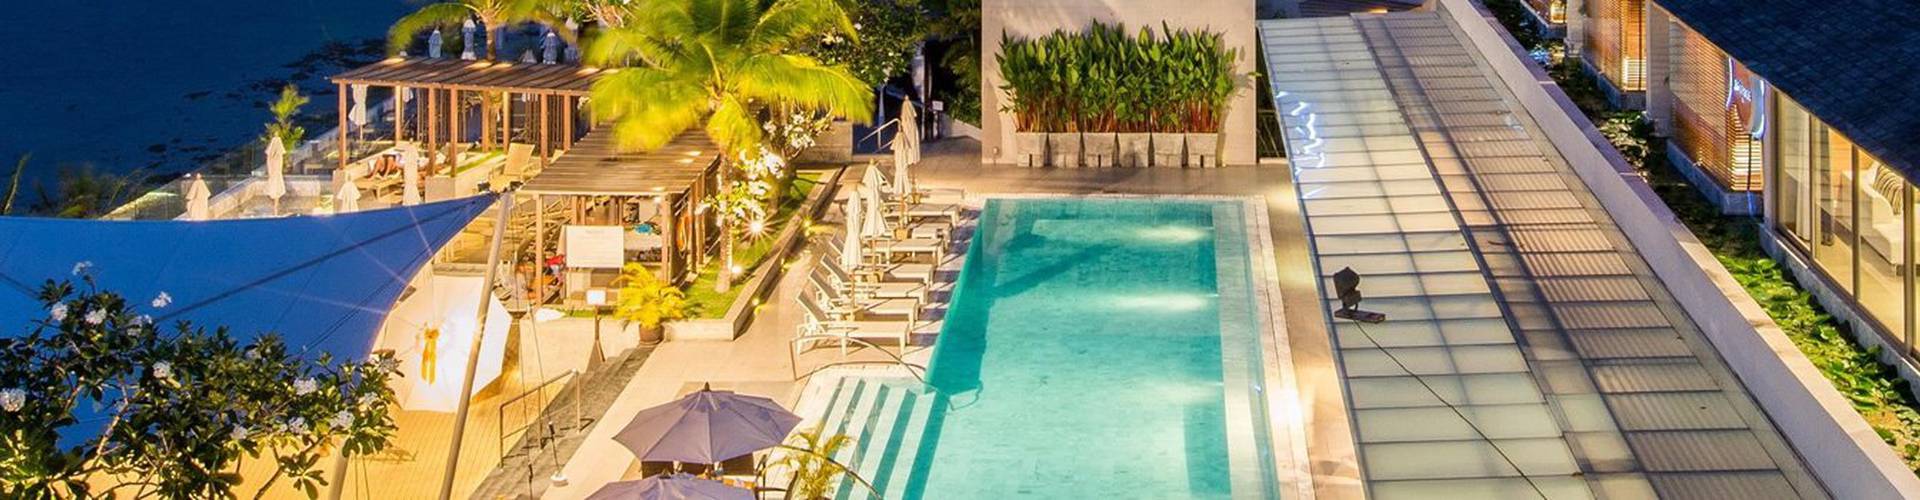 Cape Sienna Phuket Gourmet Hotel & Villas - Phuket - Contact